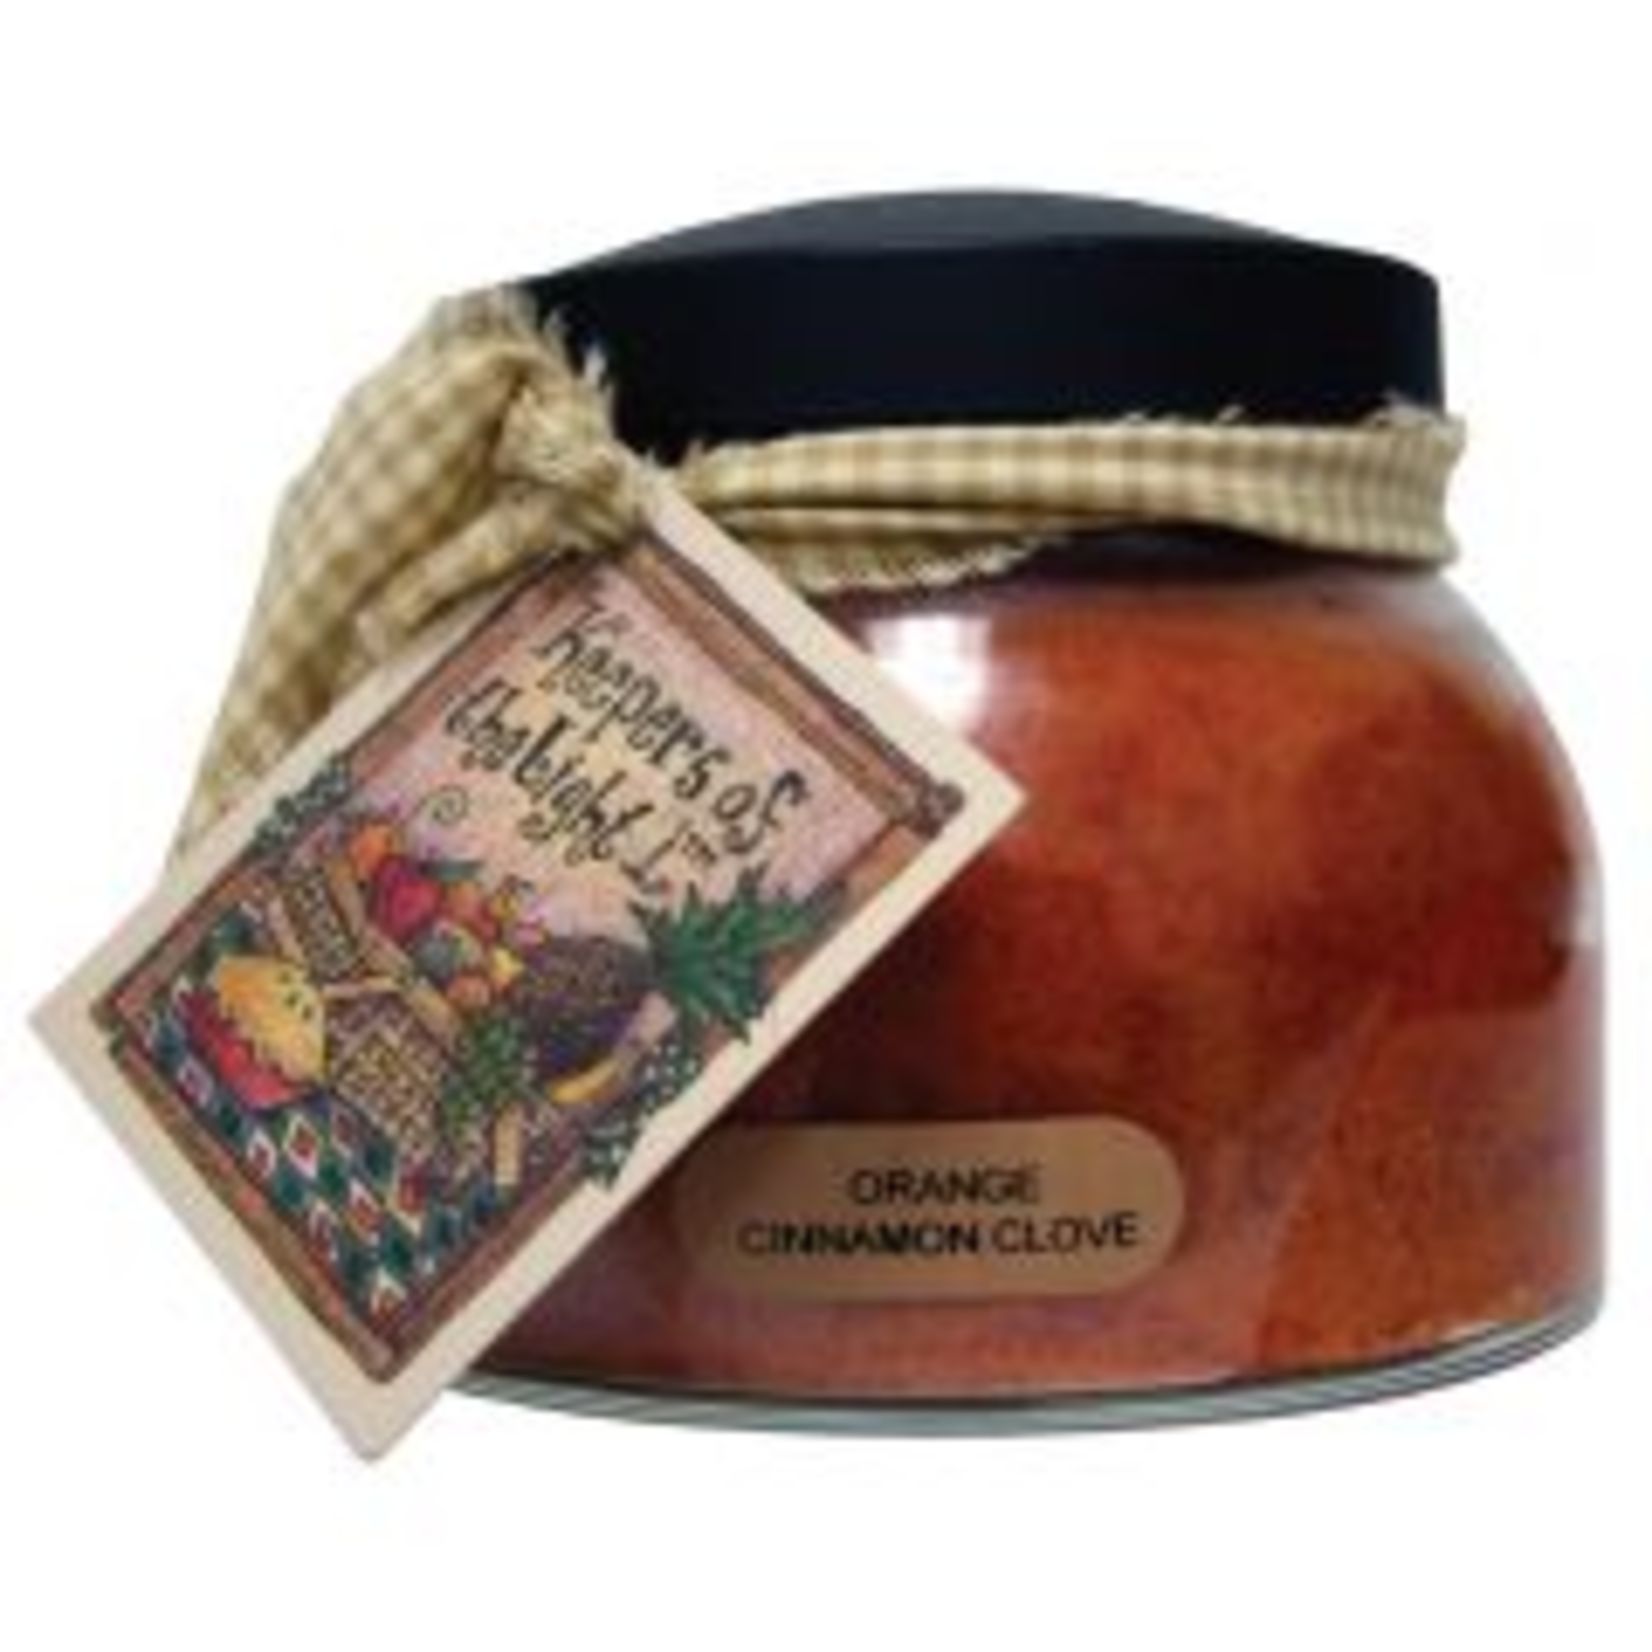 A Cheerful Giver Orange Cinnamon Clove